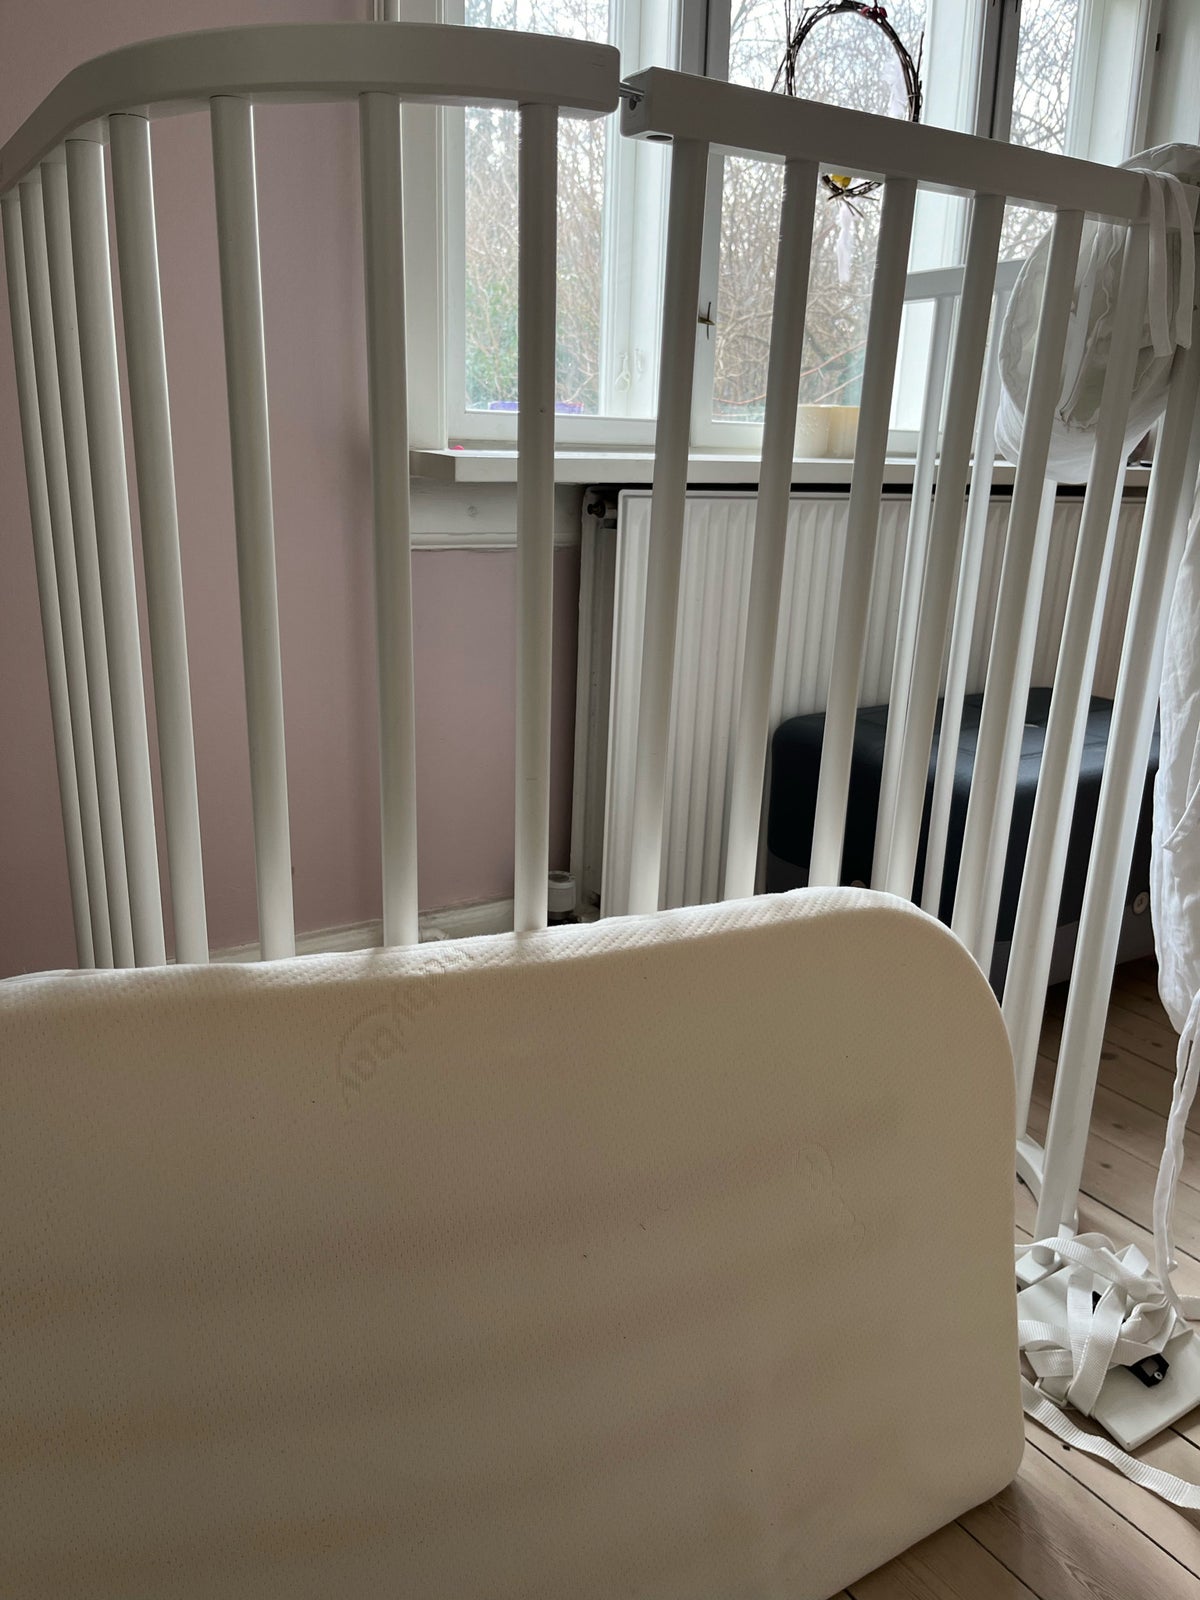 Babyseng, Babybay bedside crib